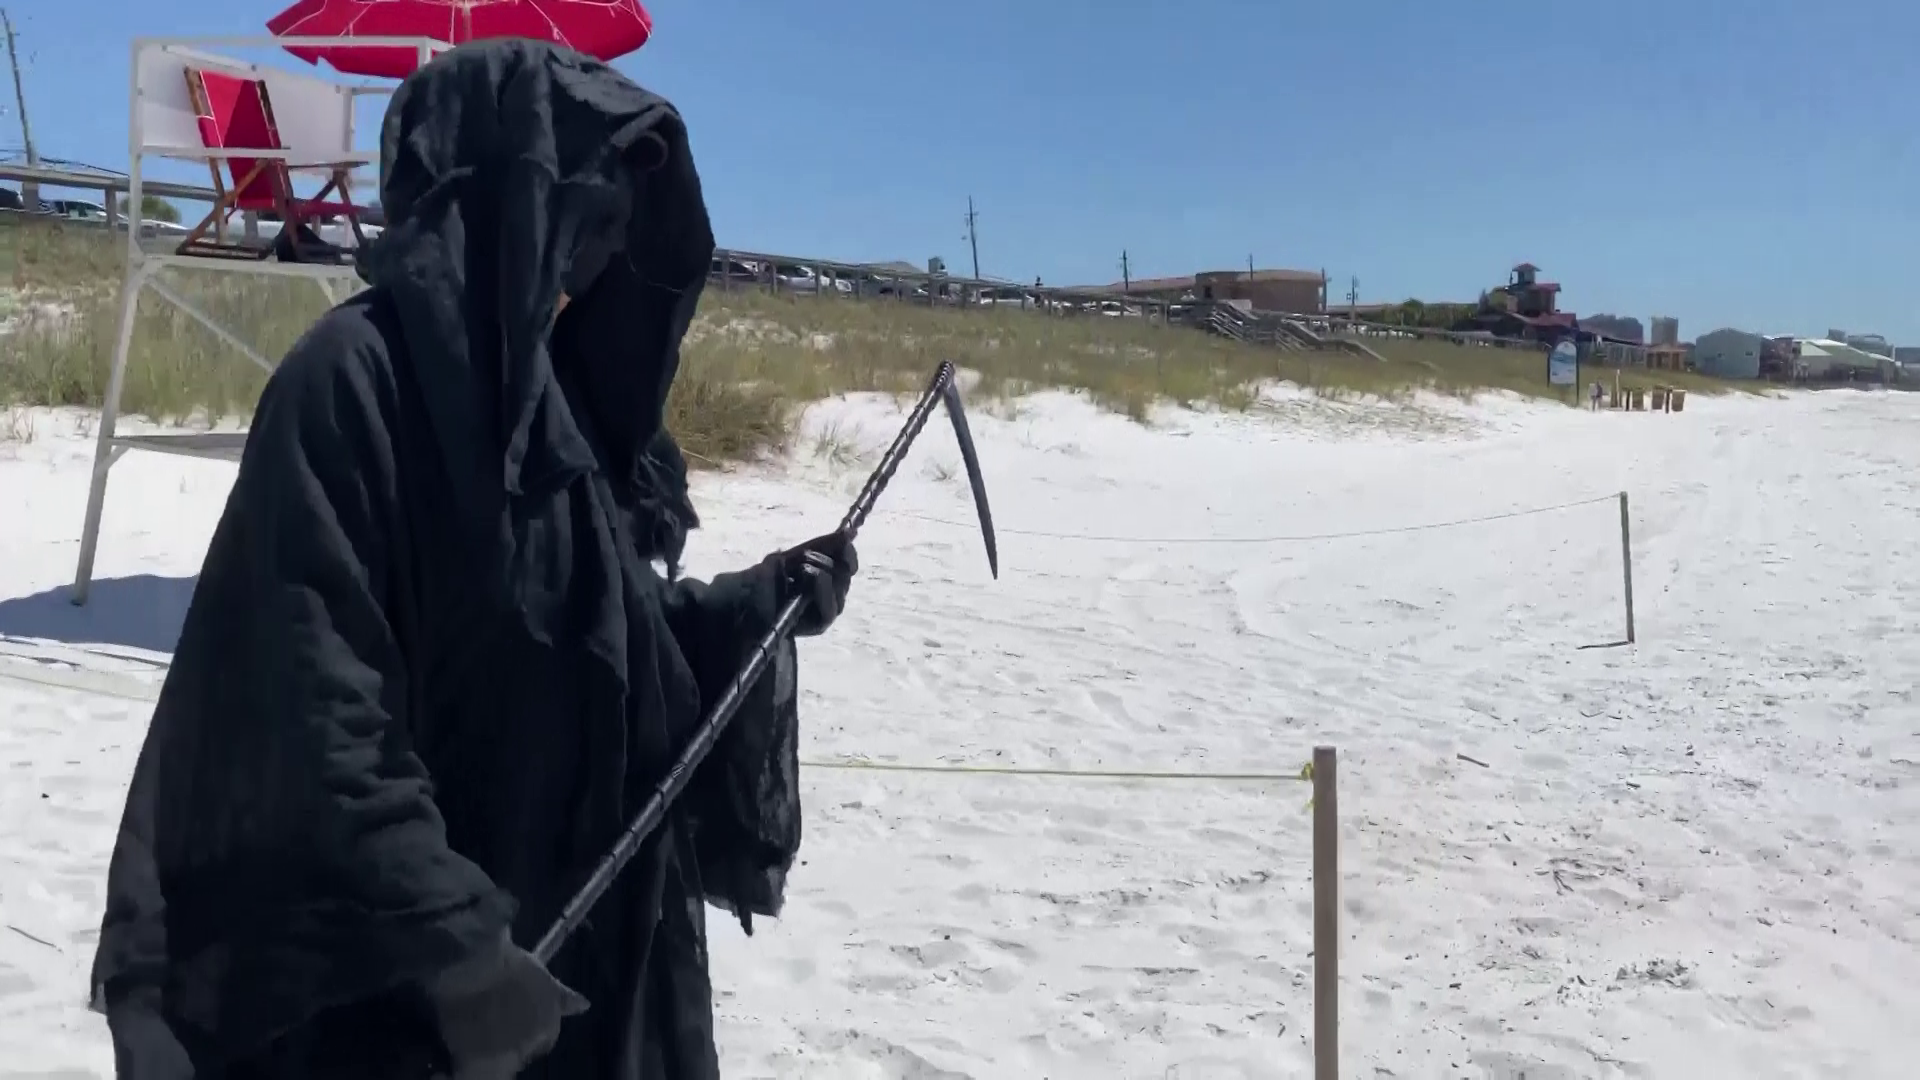 The Grim Reaper Visits Florida S Beaches With Coronavirus Message